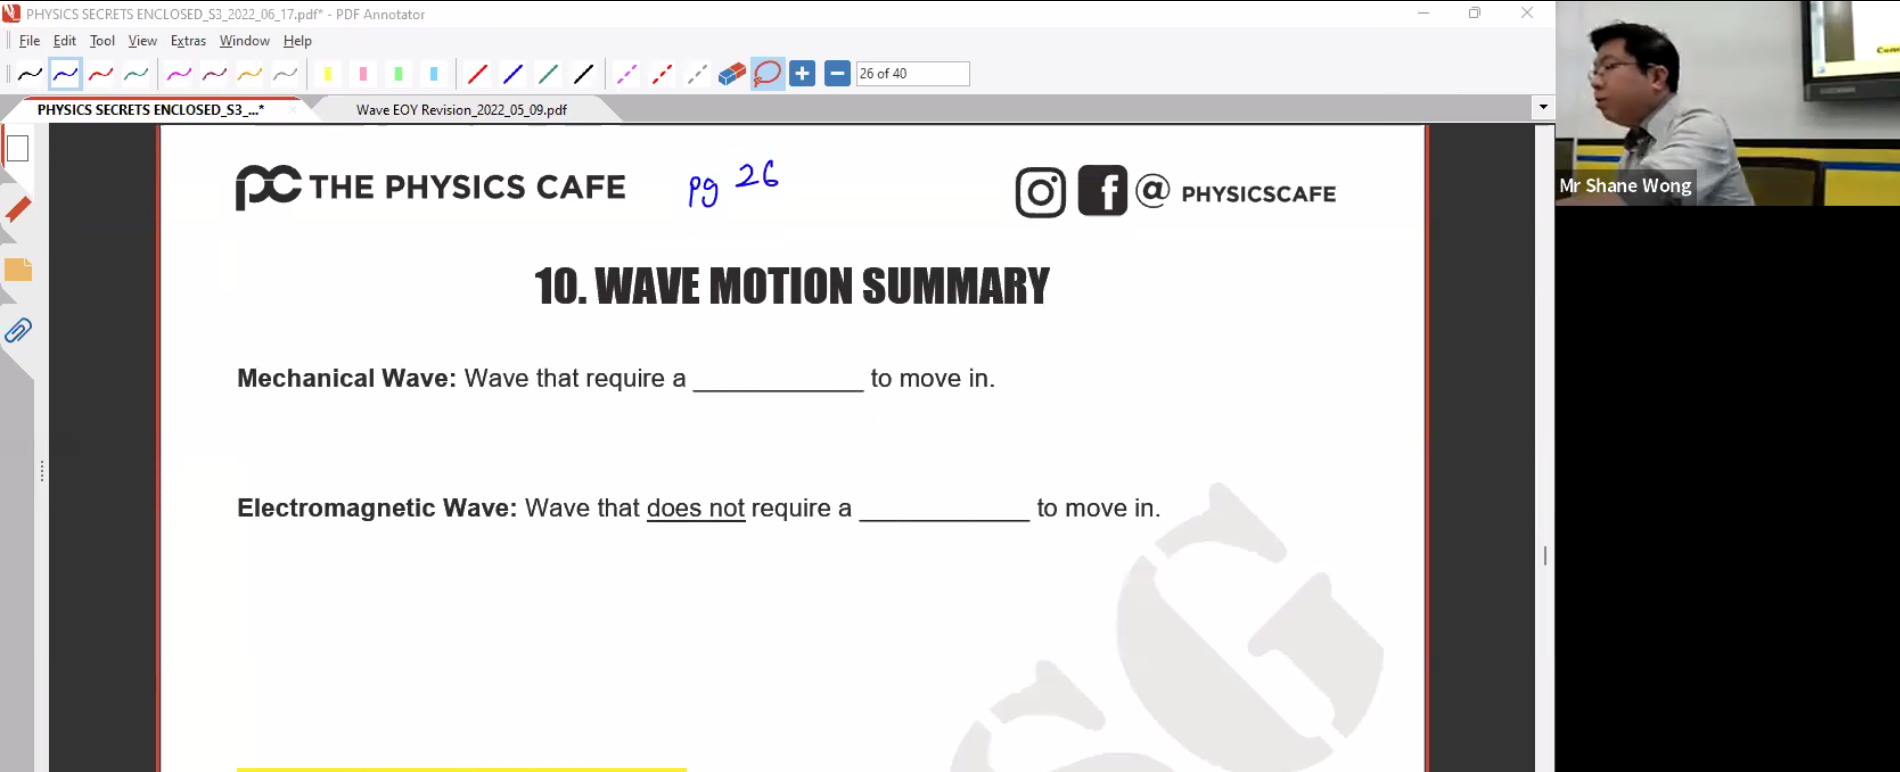 33. Wave EOY Revision [2022] - SW